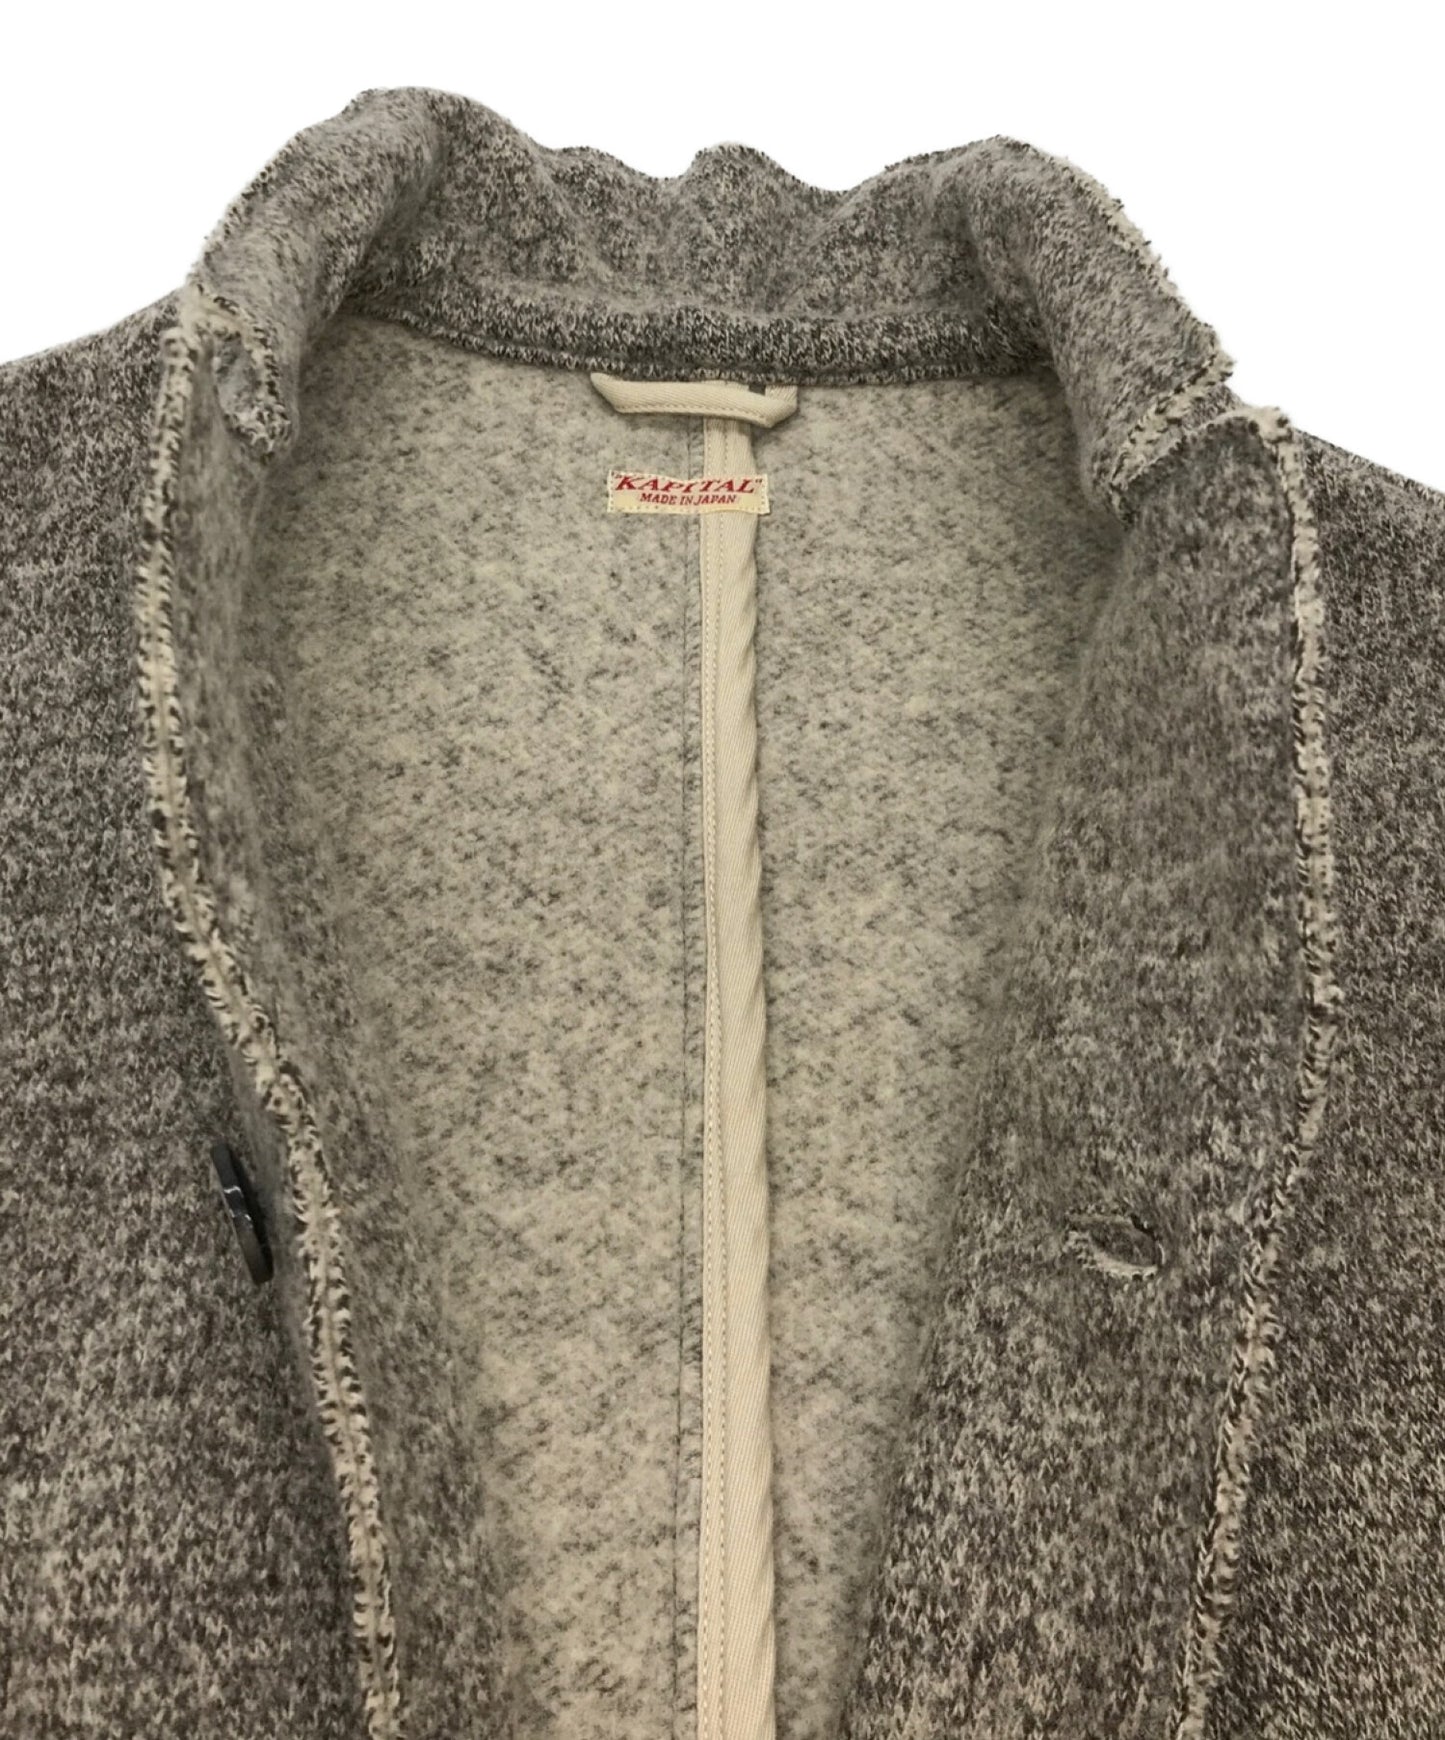 Kapital Tyrol Wool 유목민 재킷 재킷 재킷 코트 울 코트 울 조킷 EK-398